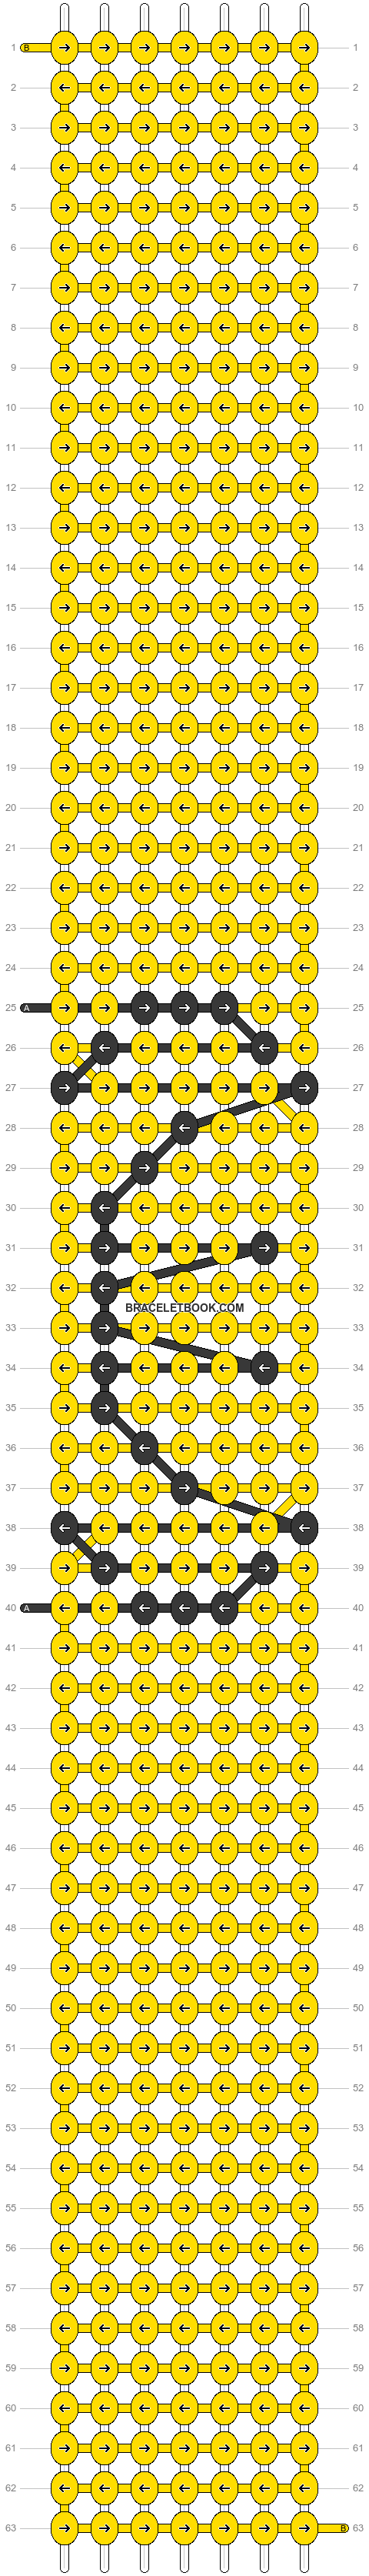 Alpha pattern #78135 pattern